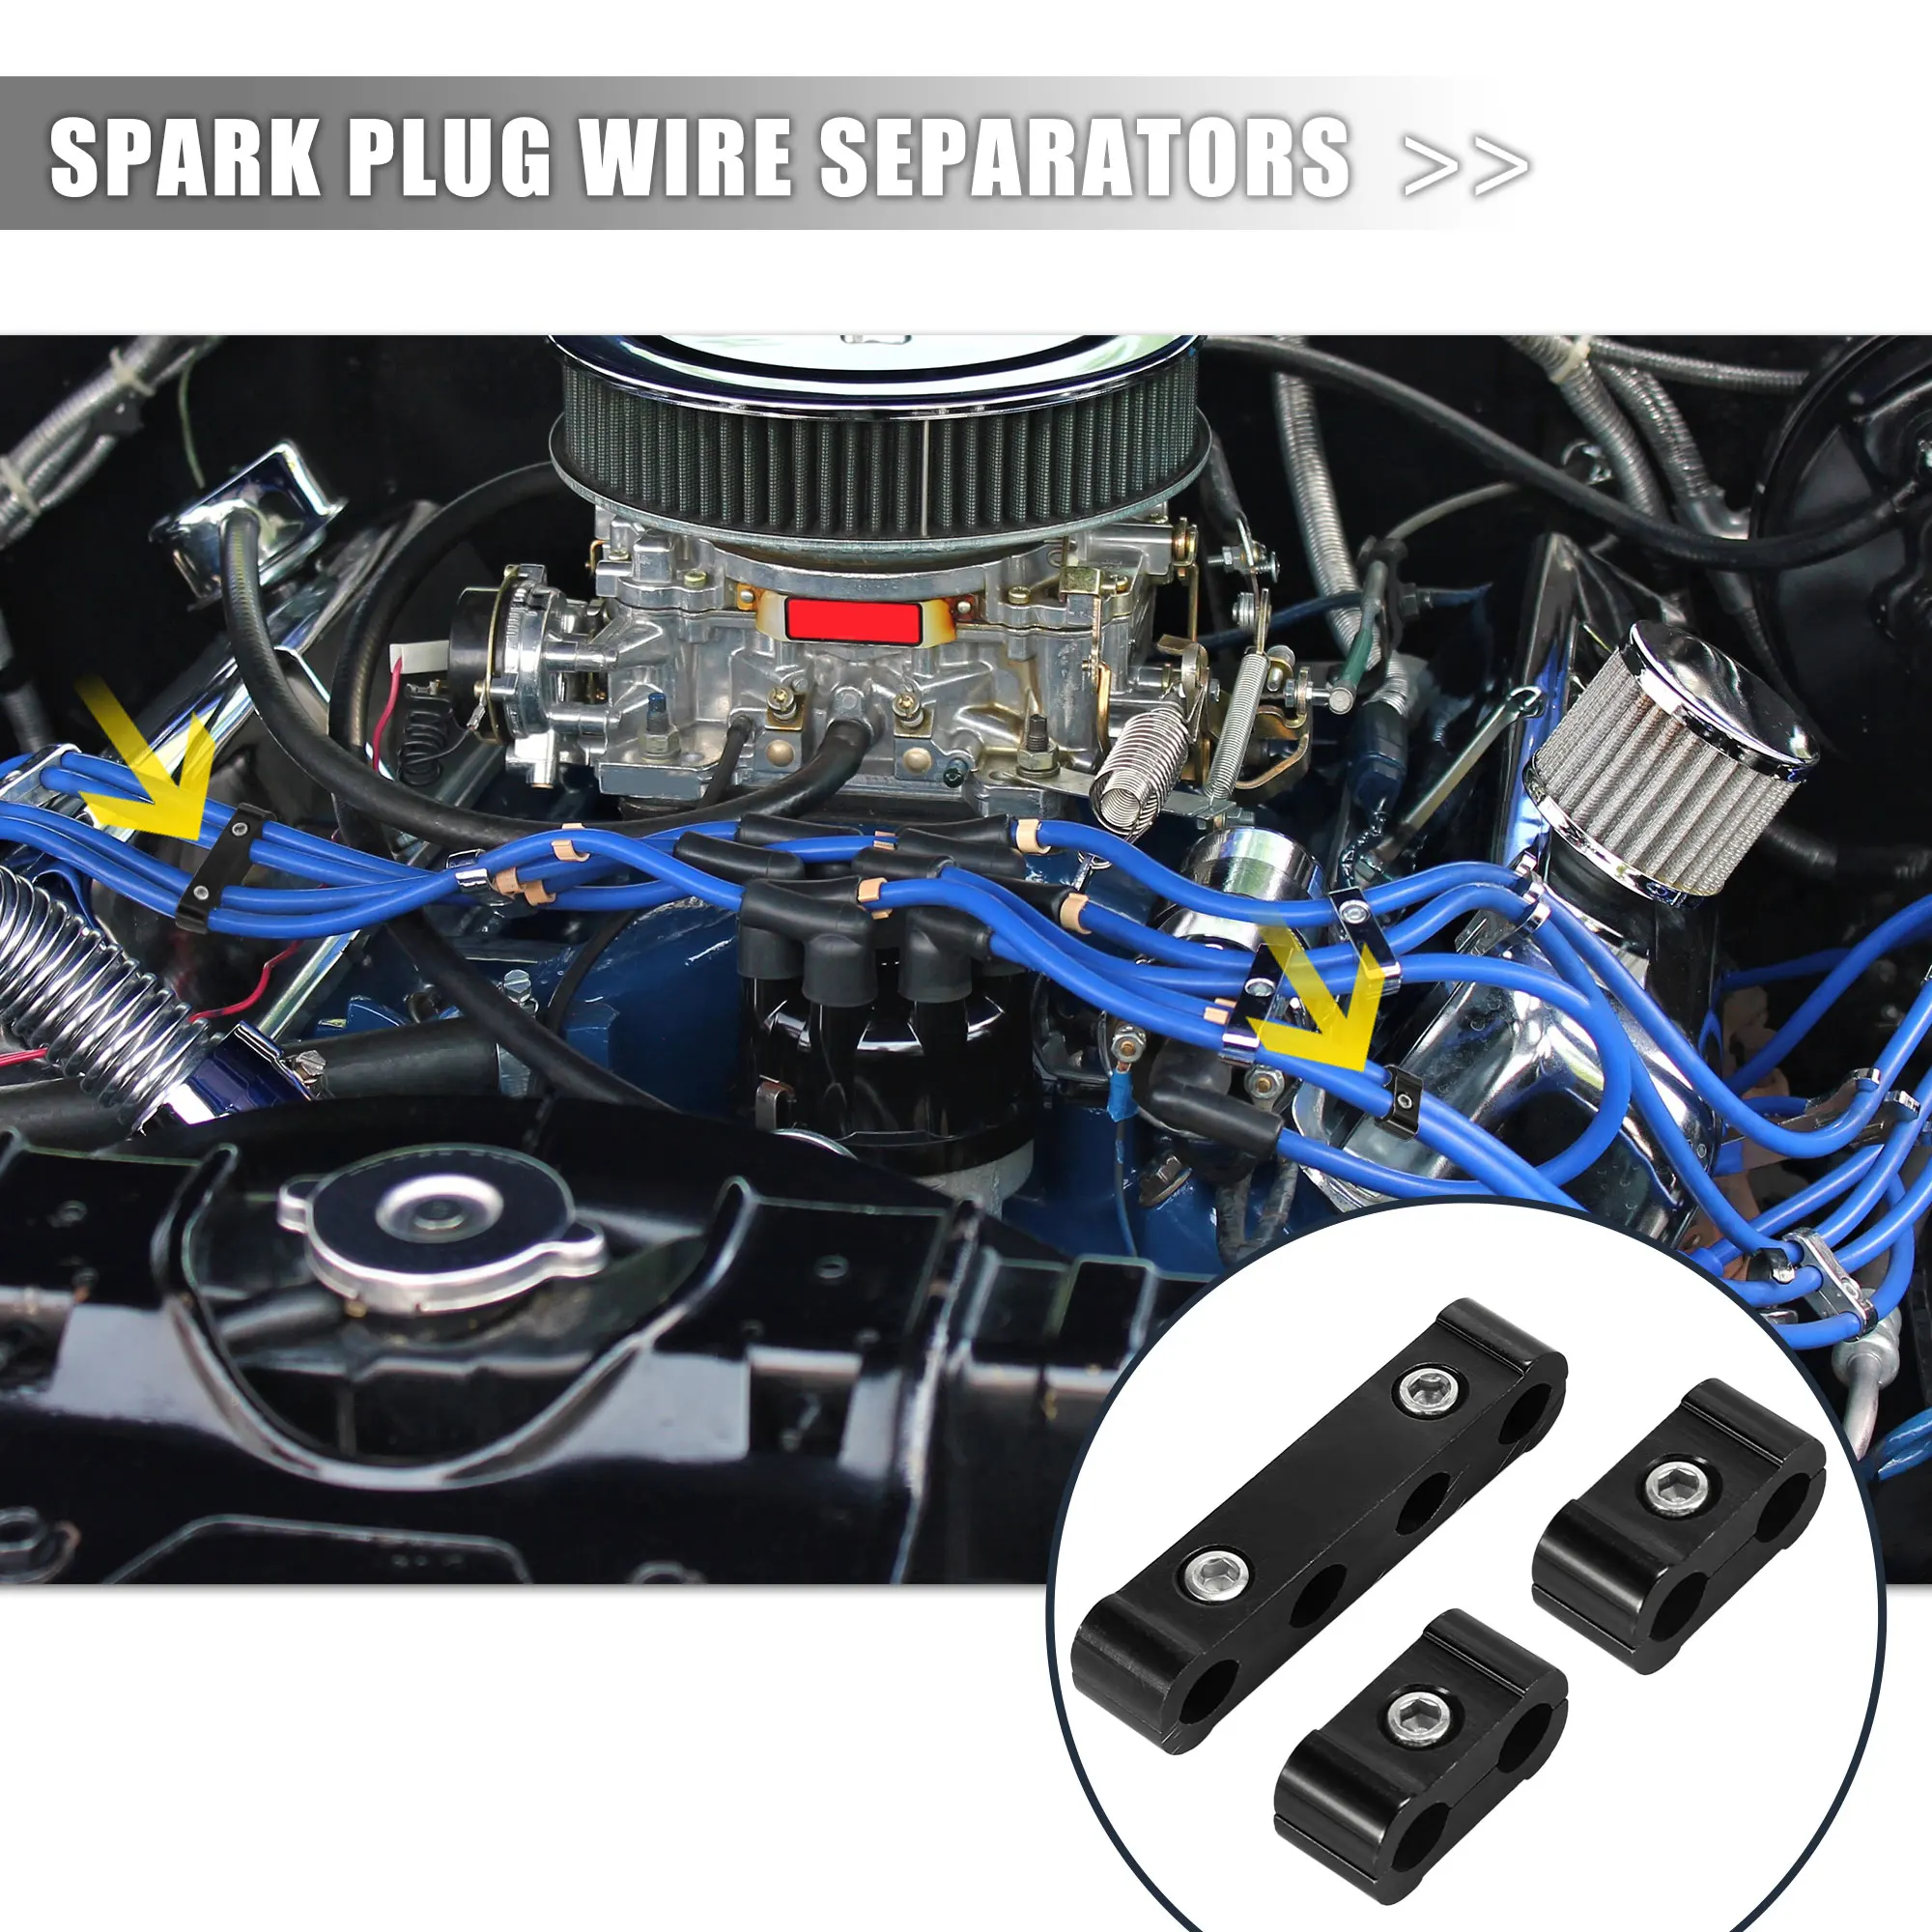 X AUTOHAUX 1 Set 8mm Car Engine Spark Plug Wire Separator Looms Divider Organizer Clamp Aluminum Alloy Gold Tone